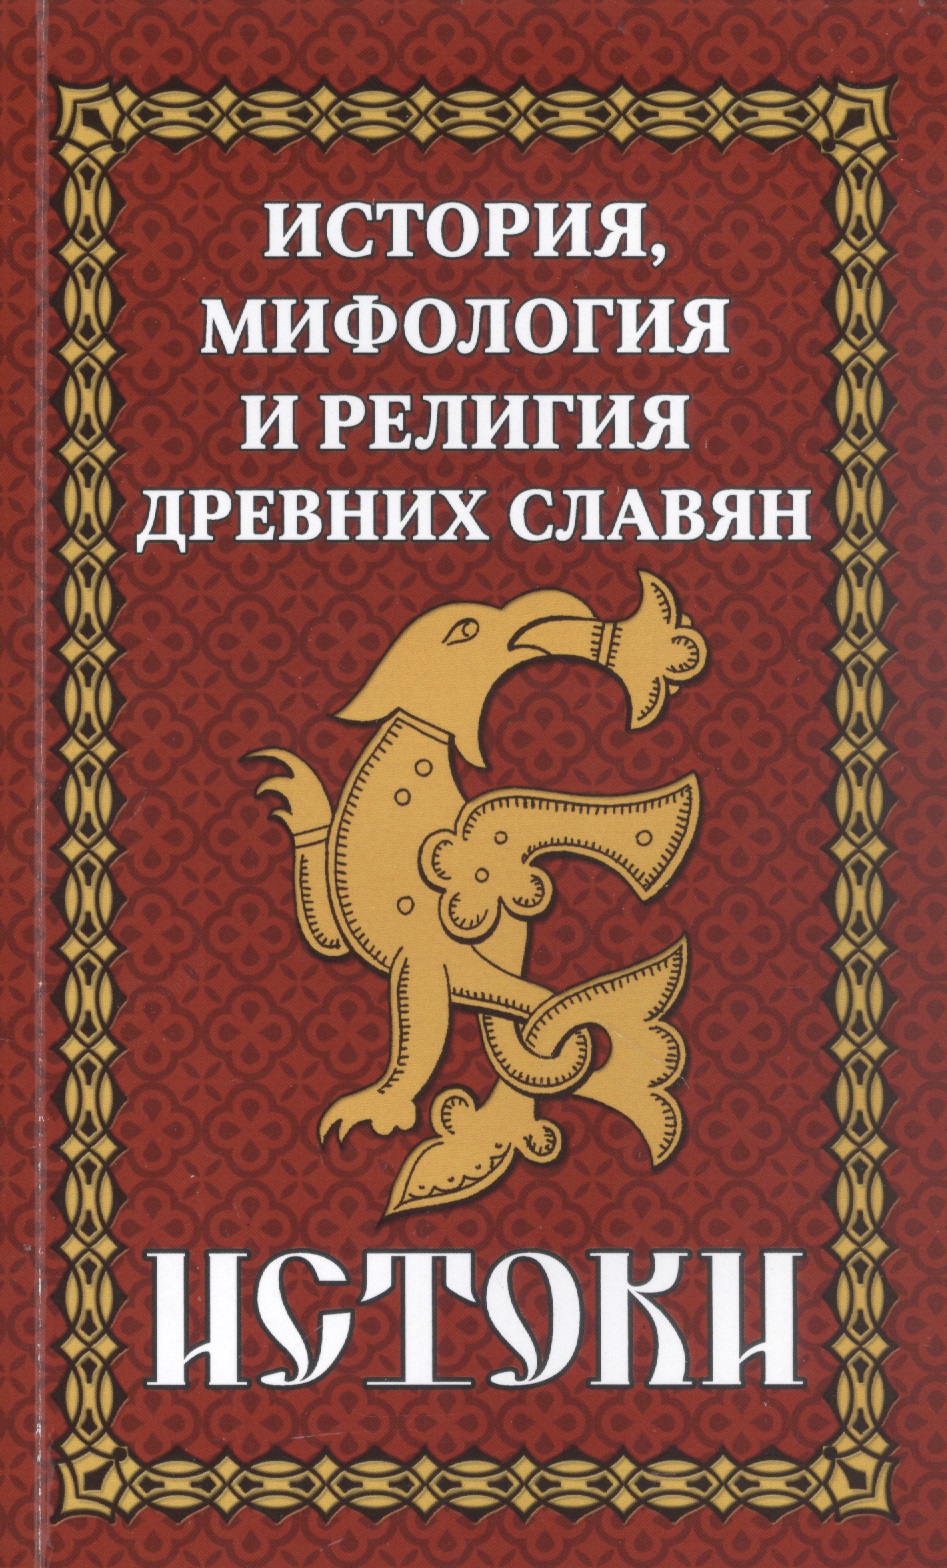 История, мифология и религия древних славян. Истоки